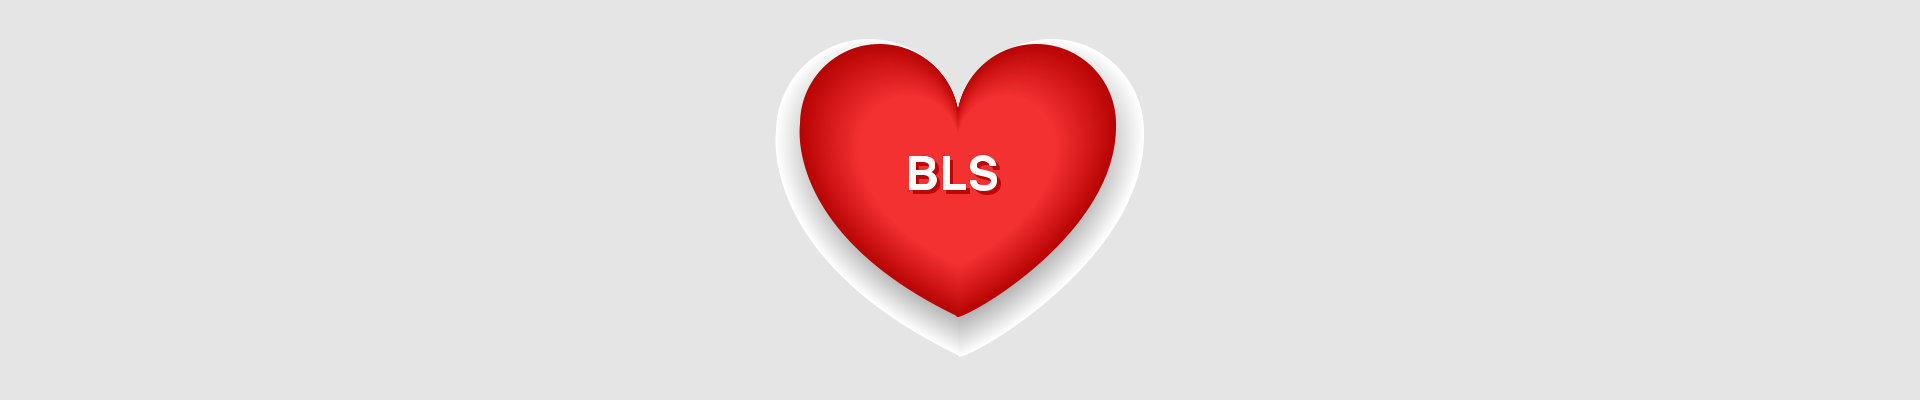 BLS heart